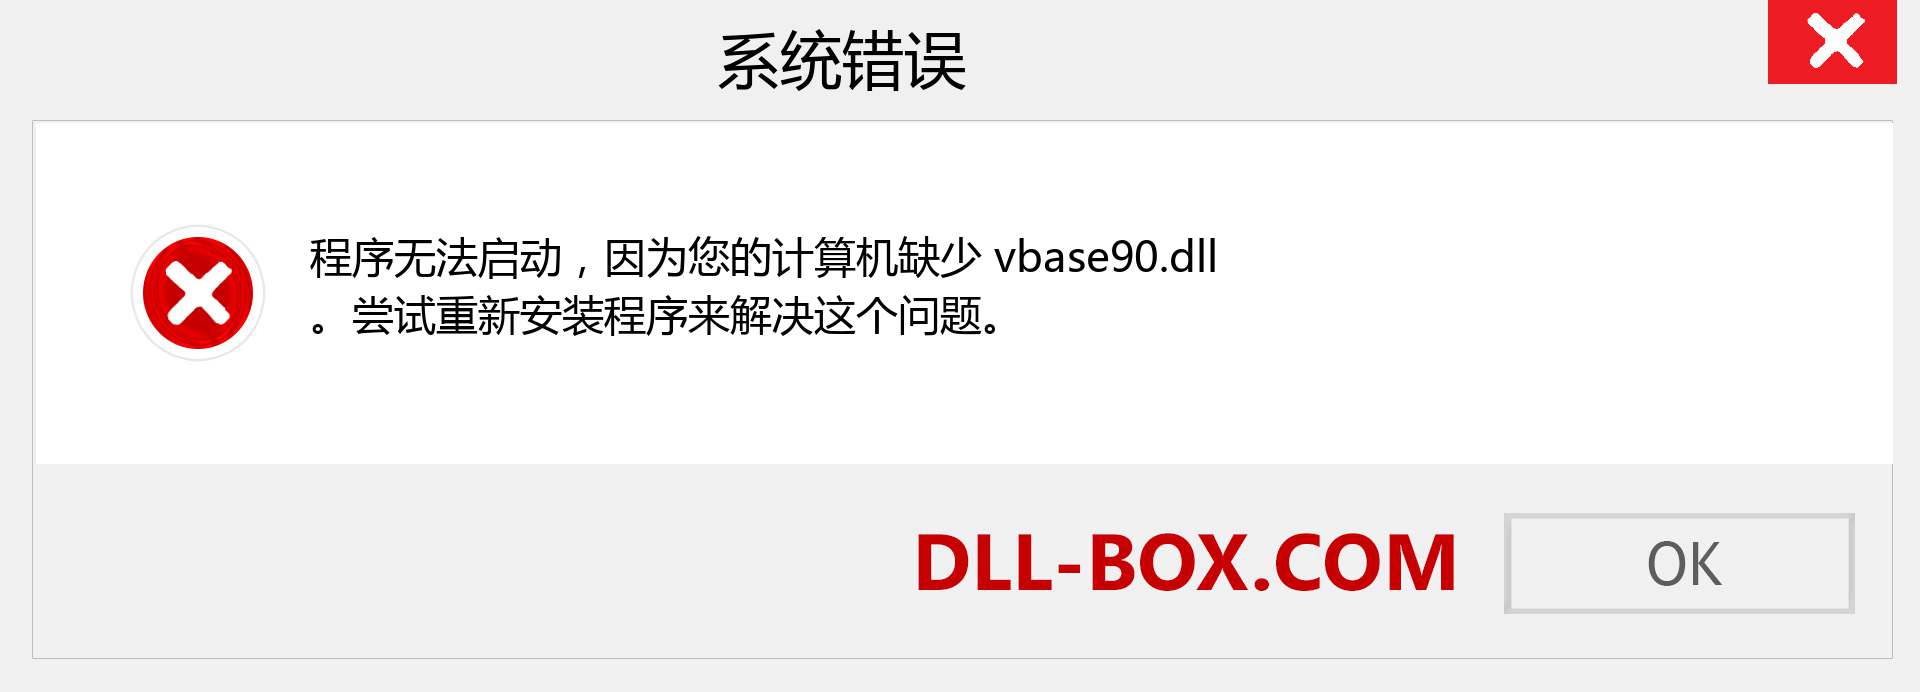 vbase90.dll 文件丢失？。 适用于 Windows 7、8、10 的下载 - 修复 Windows、照片、图像上的 vbase90 dll 丢失错误